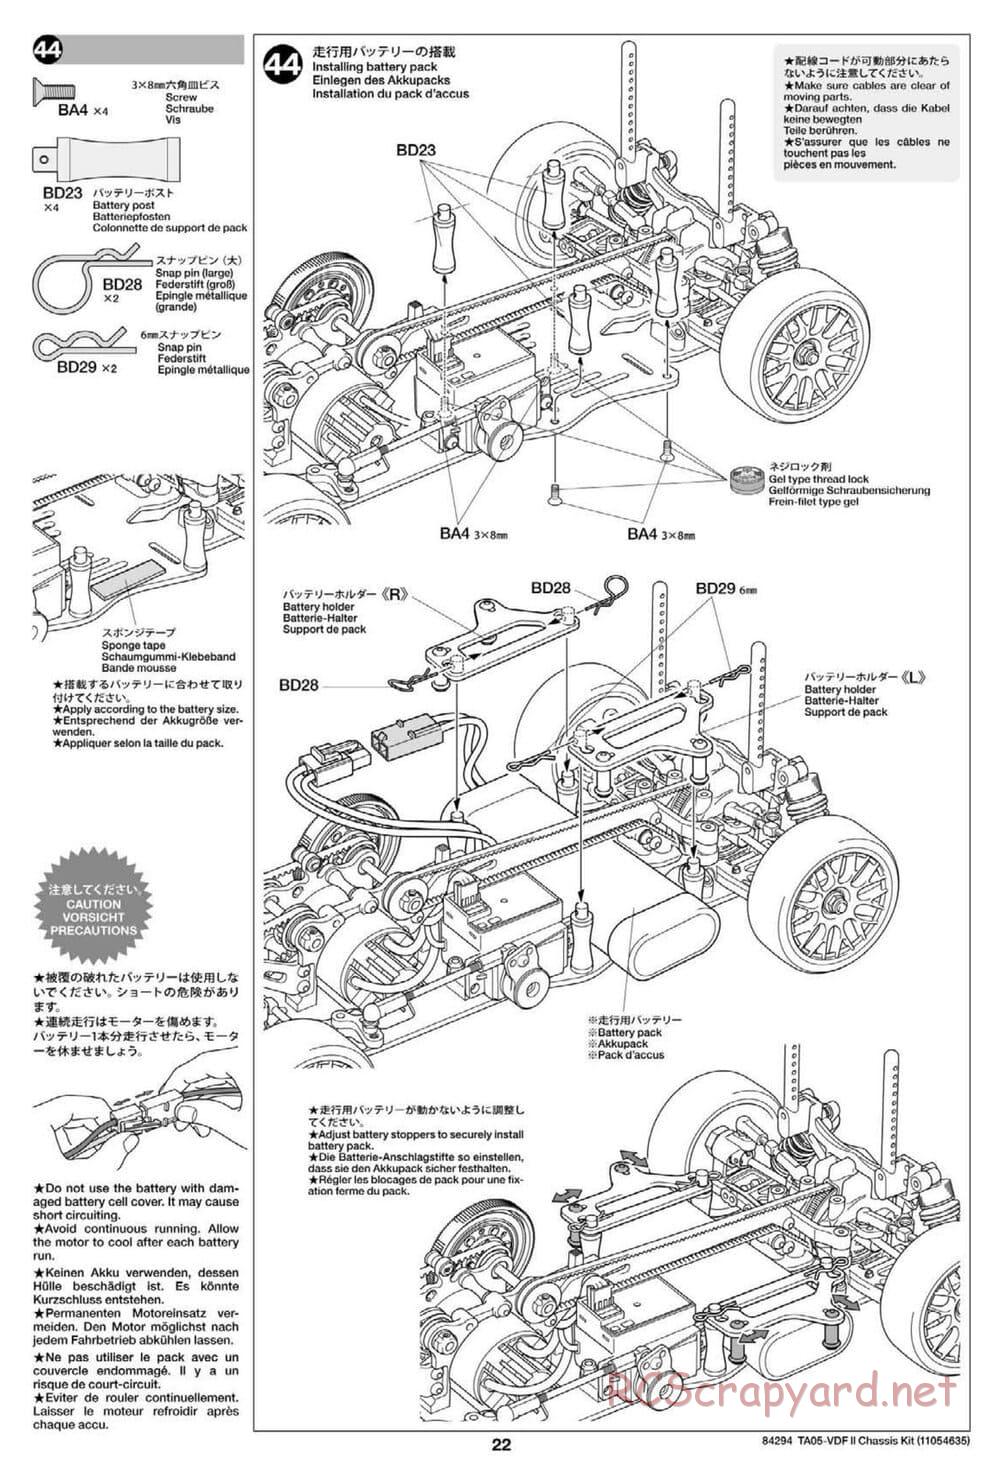 Tamiya - TA05-VDF II Drift Chassis - Manual - Page 22